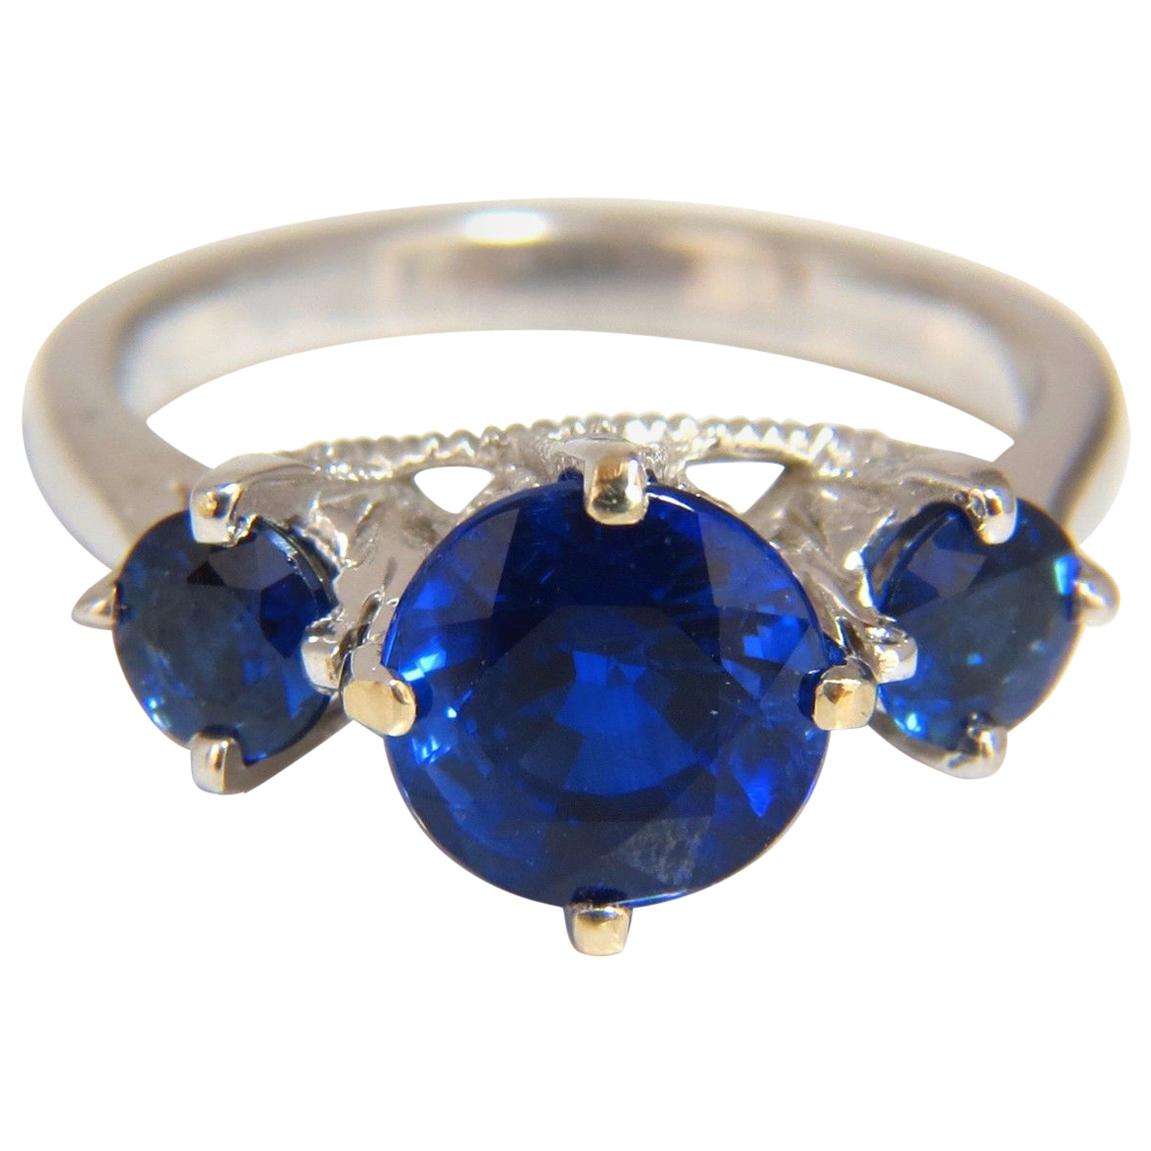 Bague en or 14 carats avec saphirs, saphirs et Kyanite naturelle bleu vif de 3,82 carats